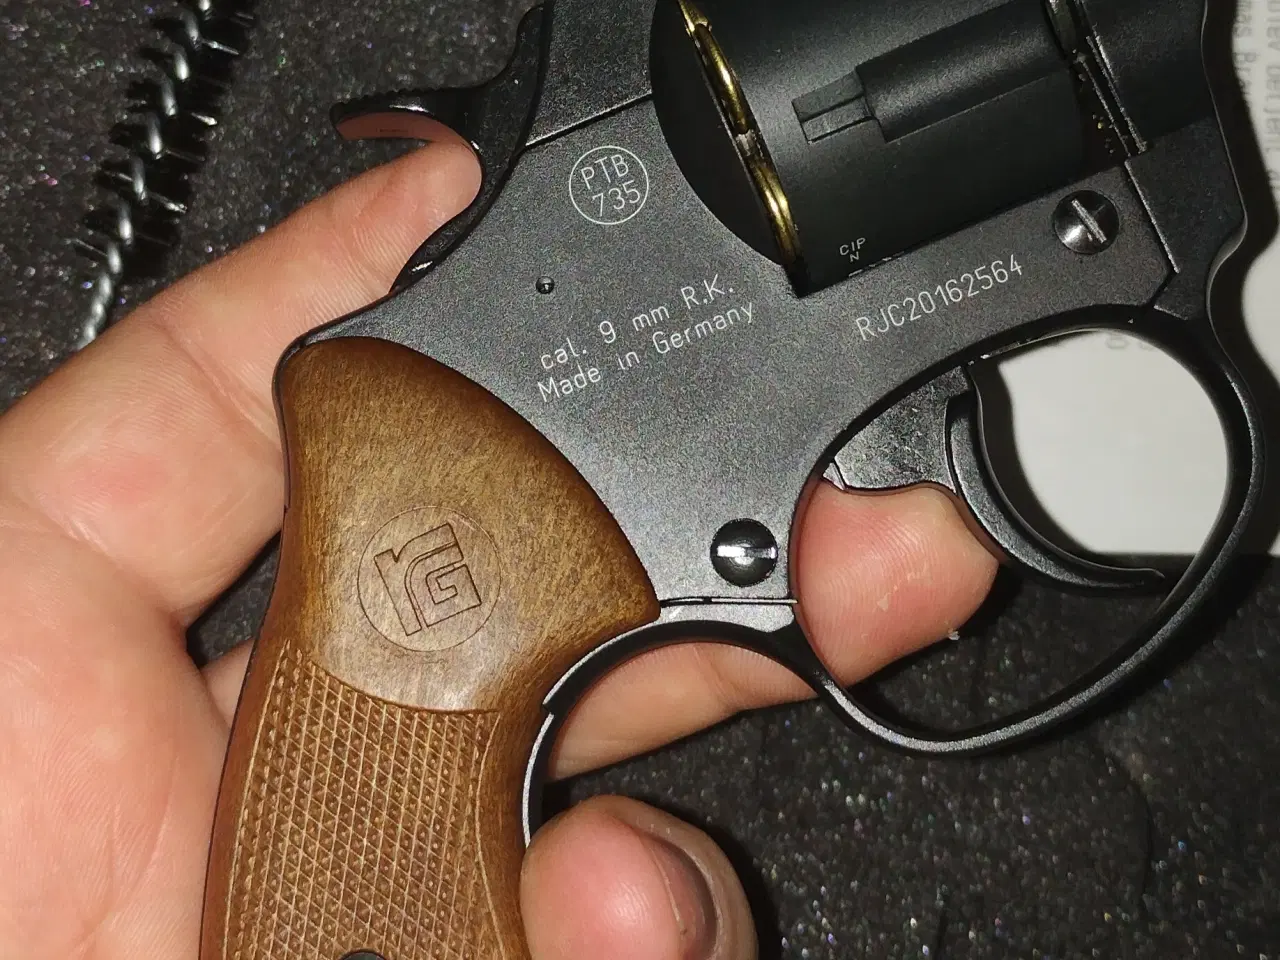 Billede 3 - Røhm RG59 signal pistol